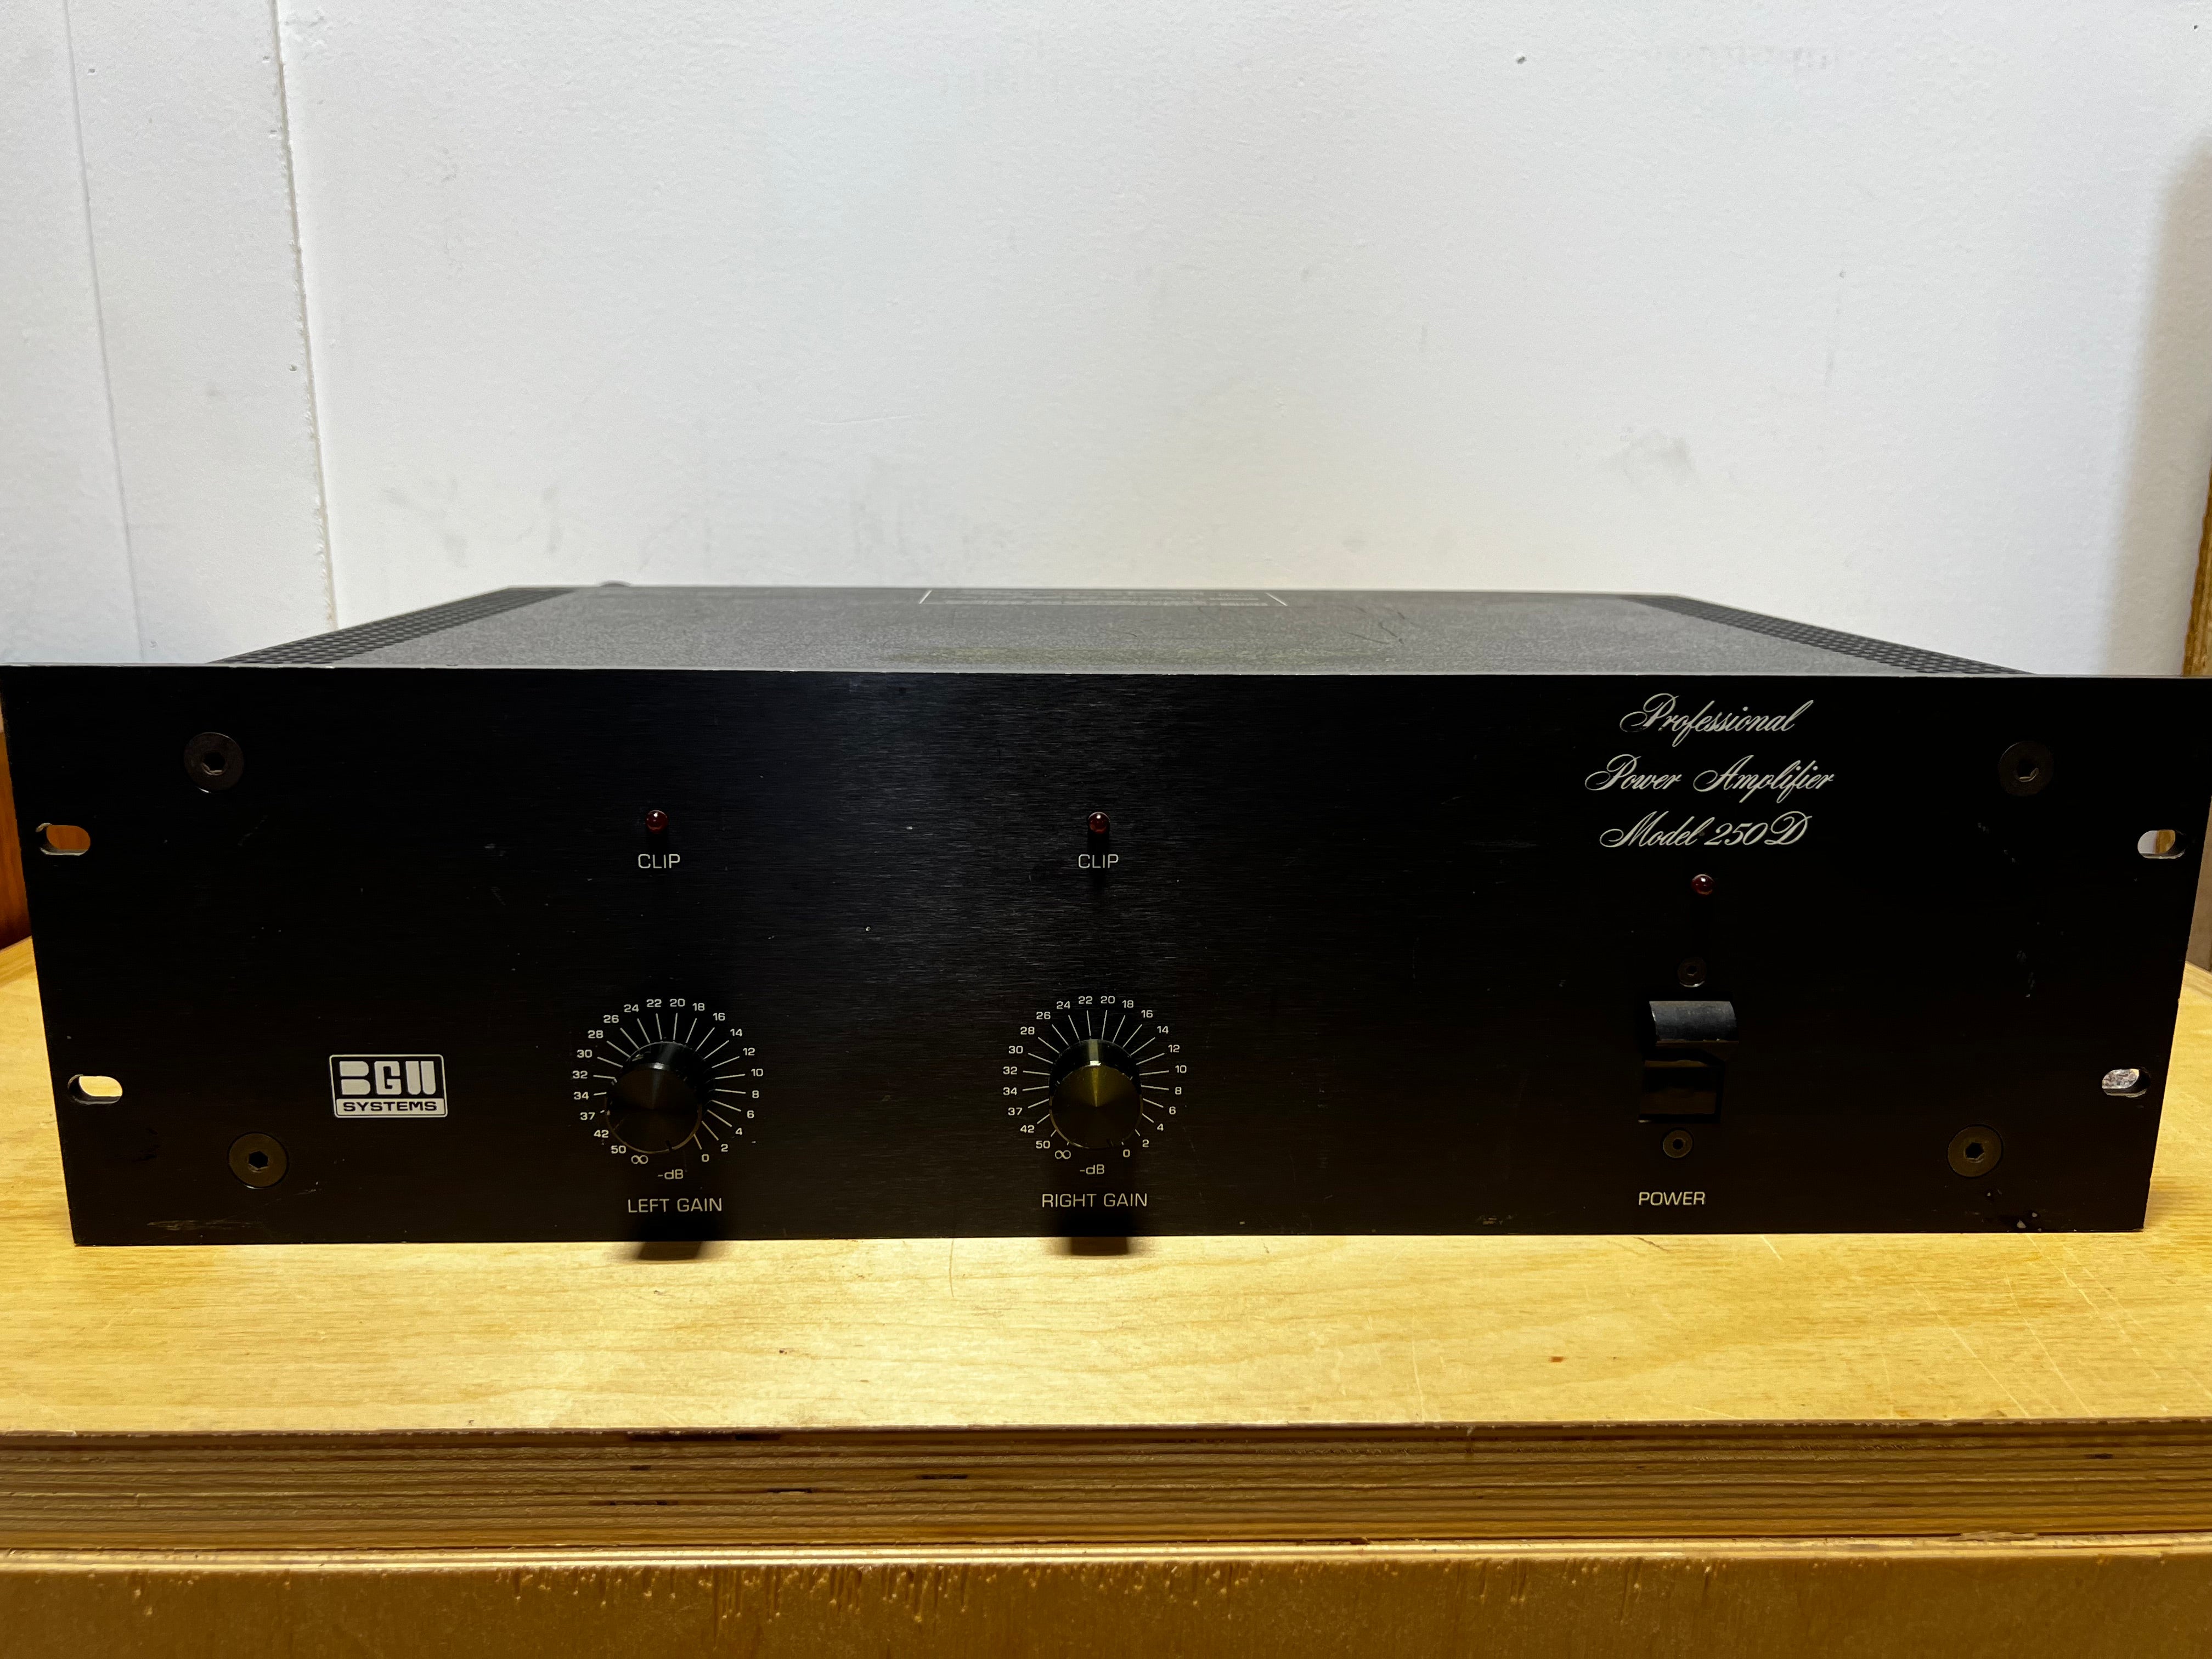 BGW 250D Professional Power Amplifier